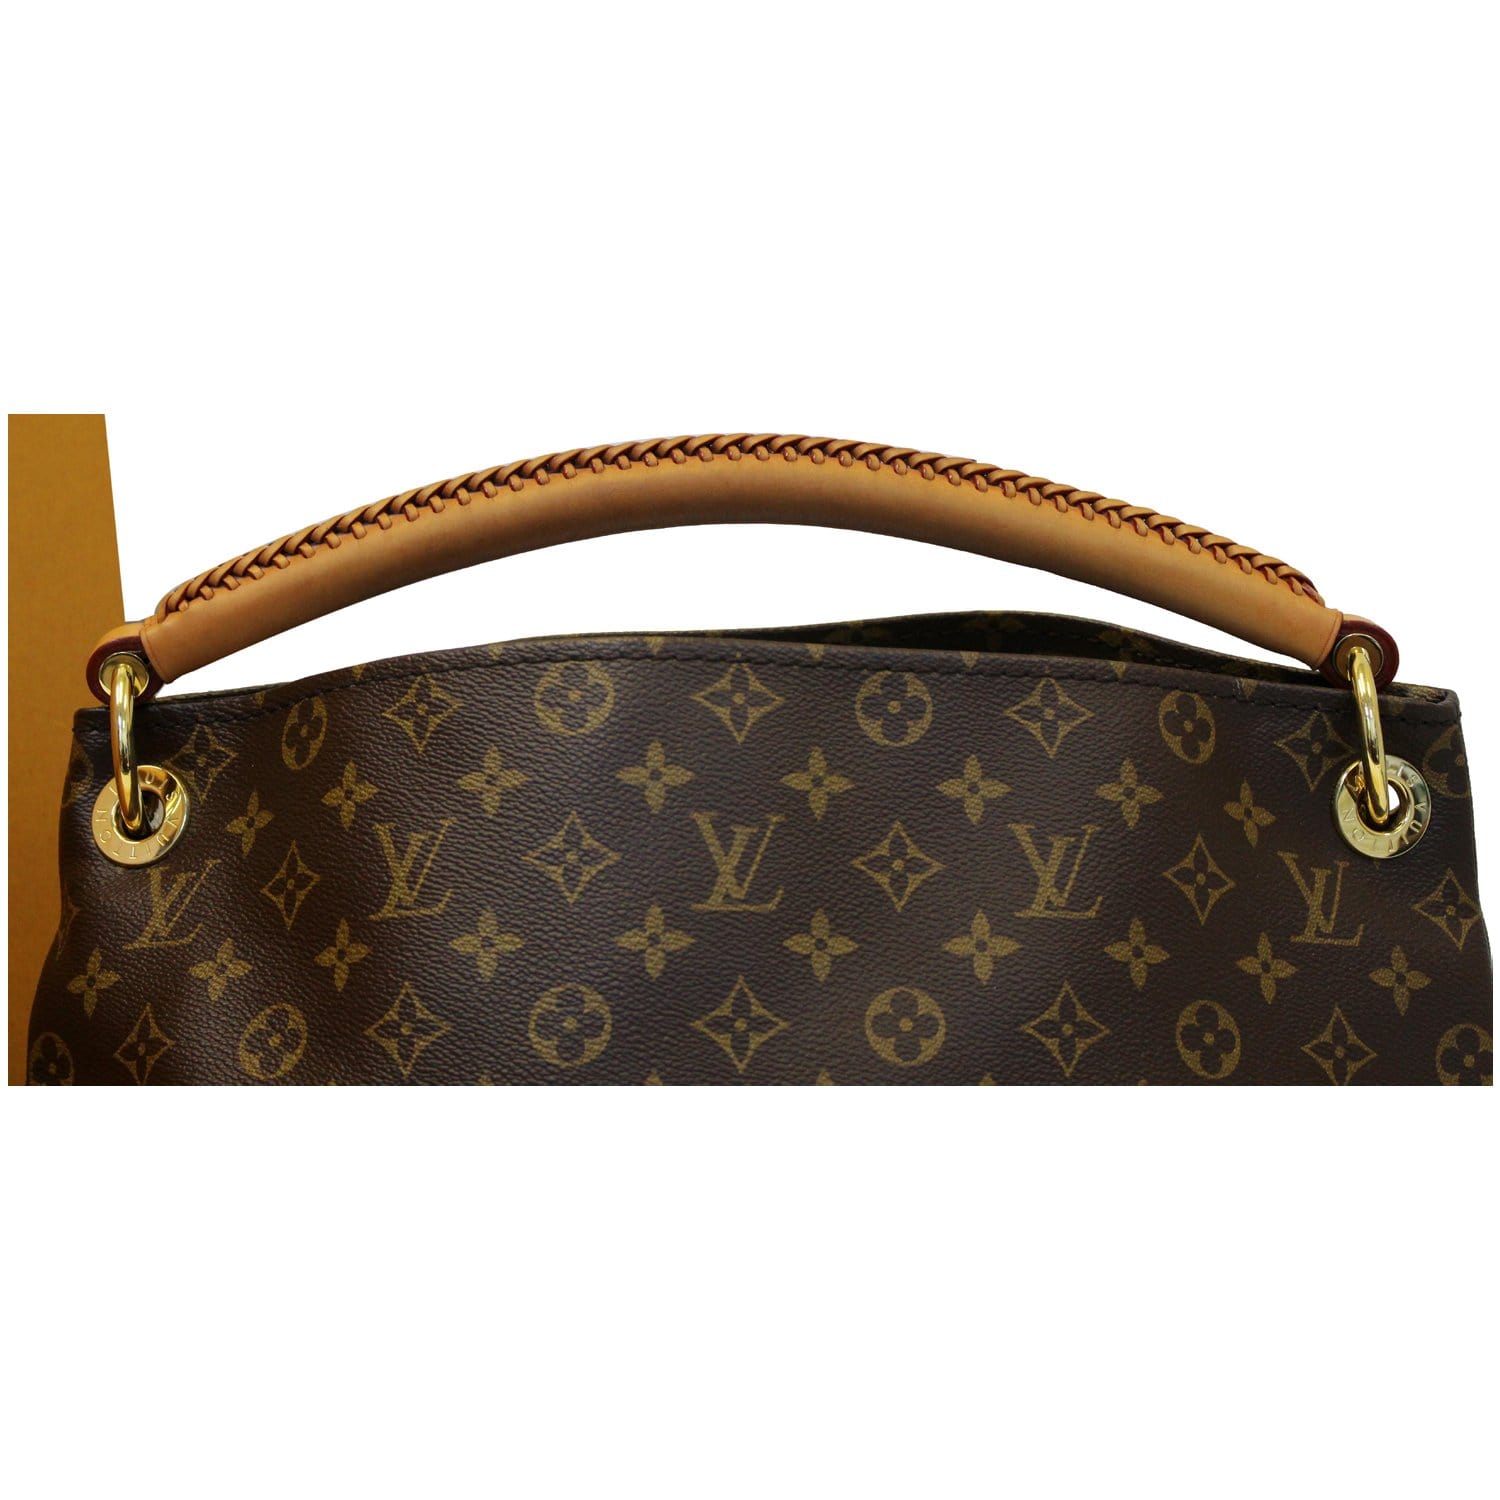 Louis Vuitton 2014 pre-owned Damier Azur Artsy MM Handbag - Farfetch